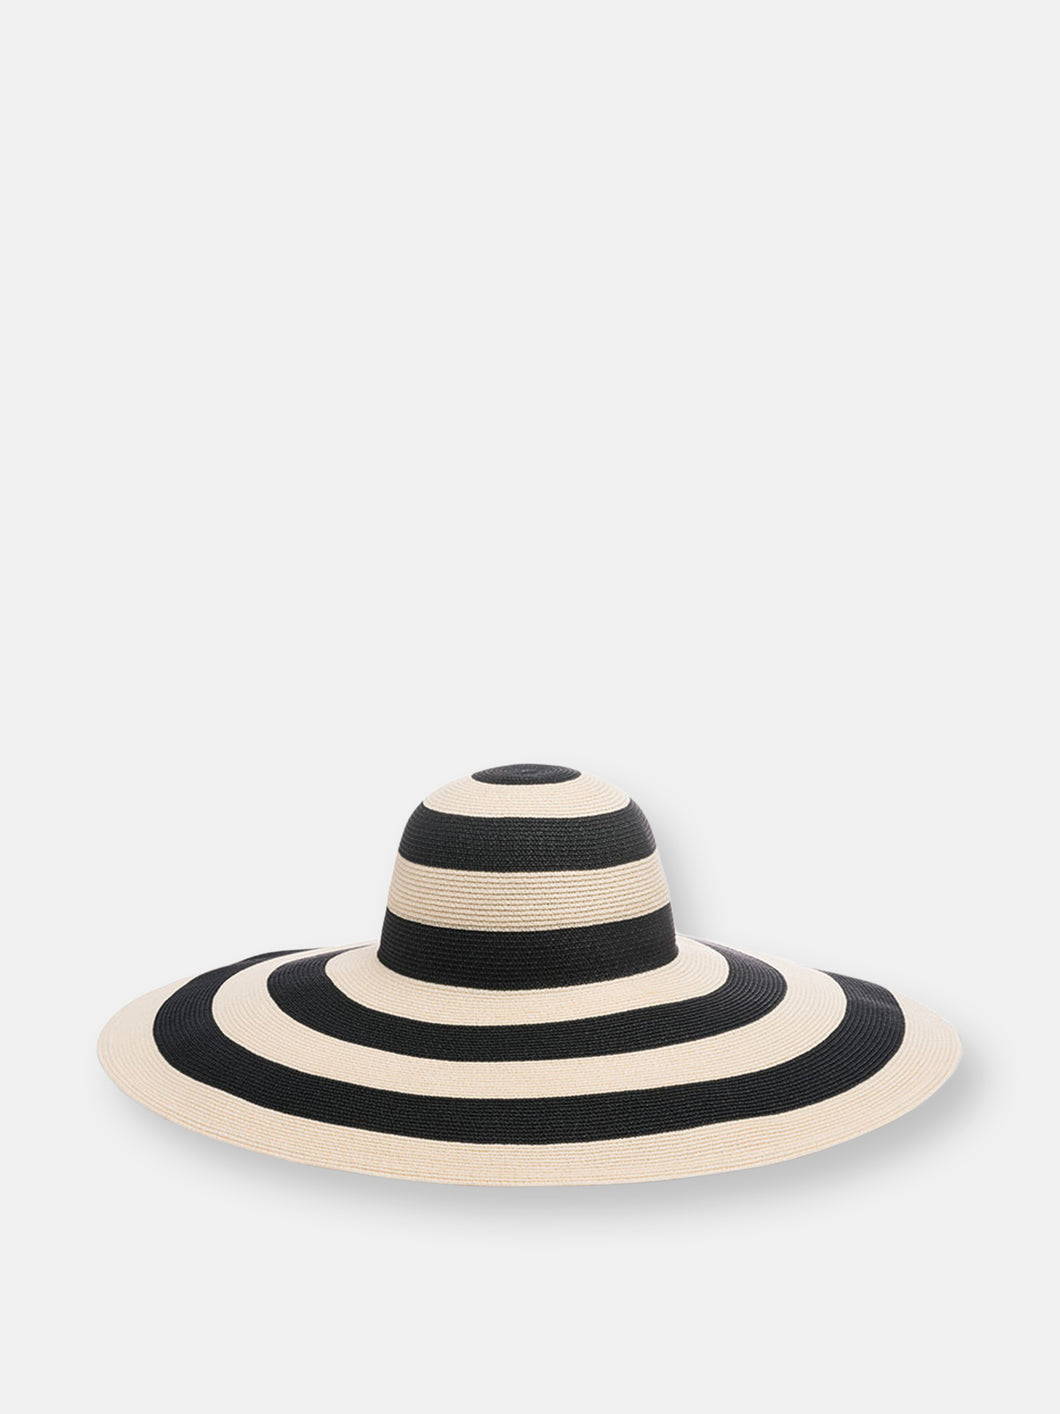 Sunny Hat - Ivory/Black